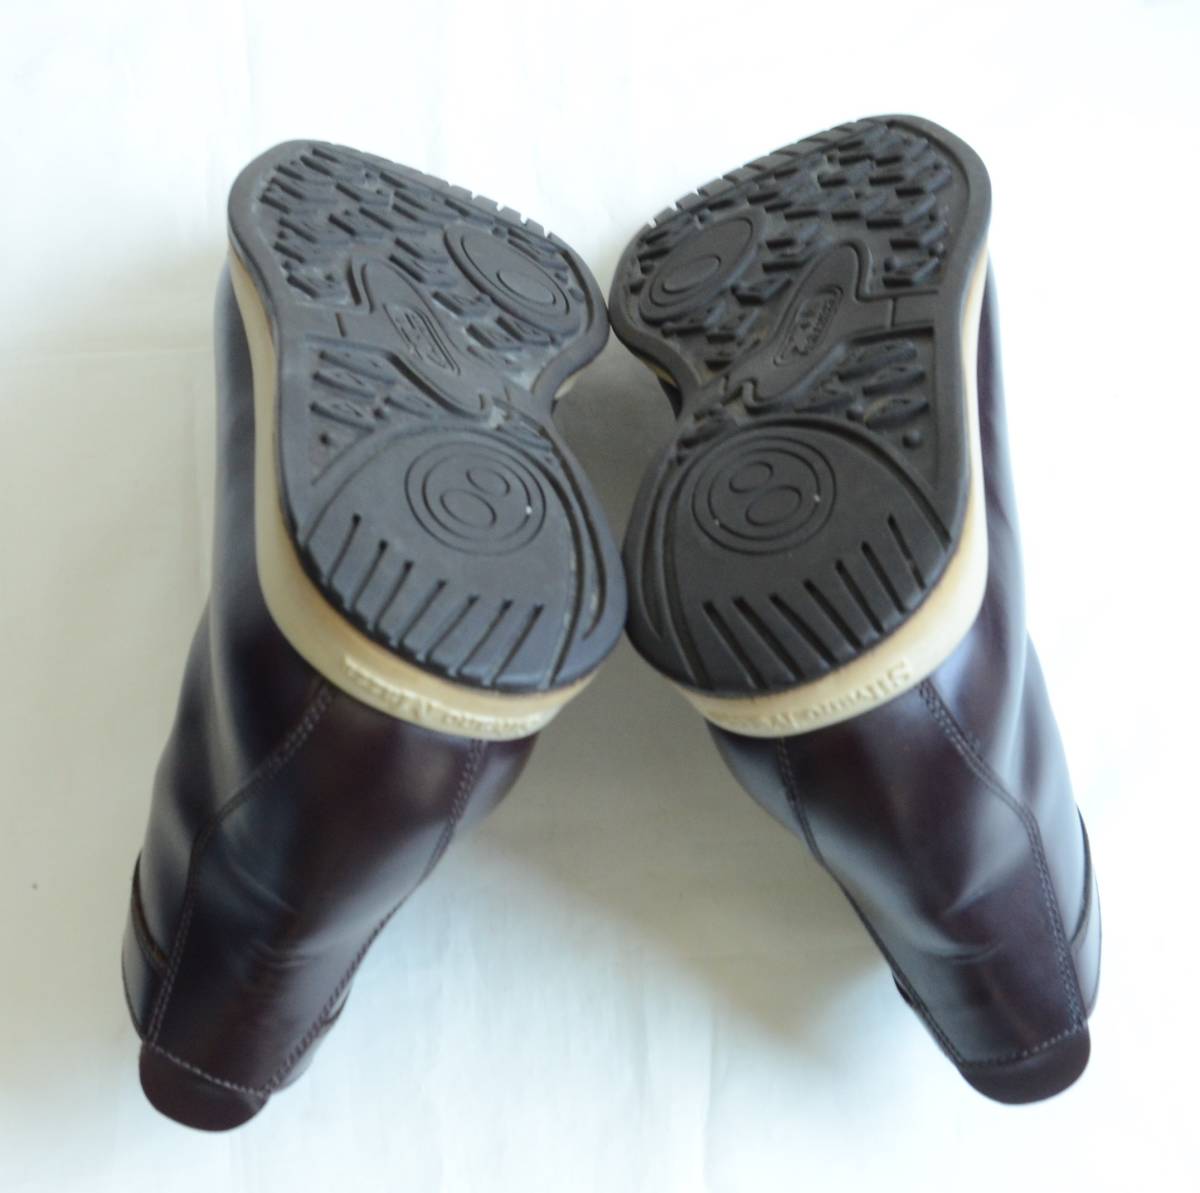  серебристый nomatsa код Van кожа спортивные туфли - ikatto size 39 25cm примерно 